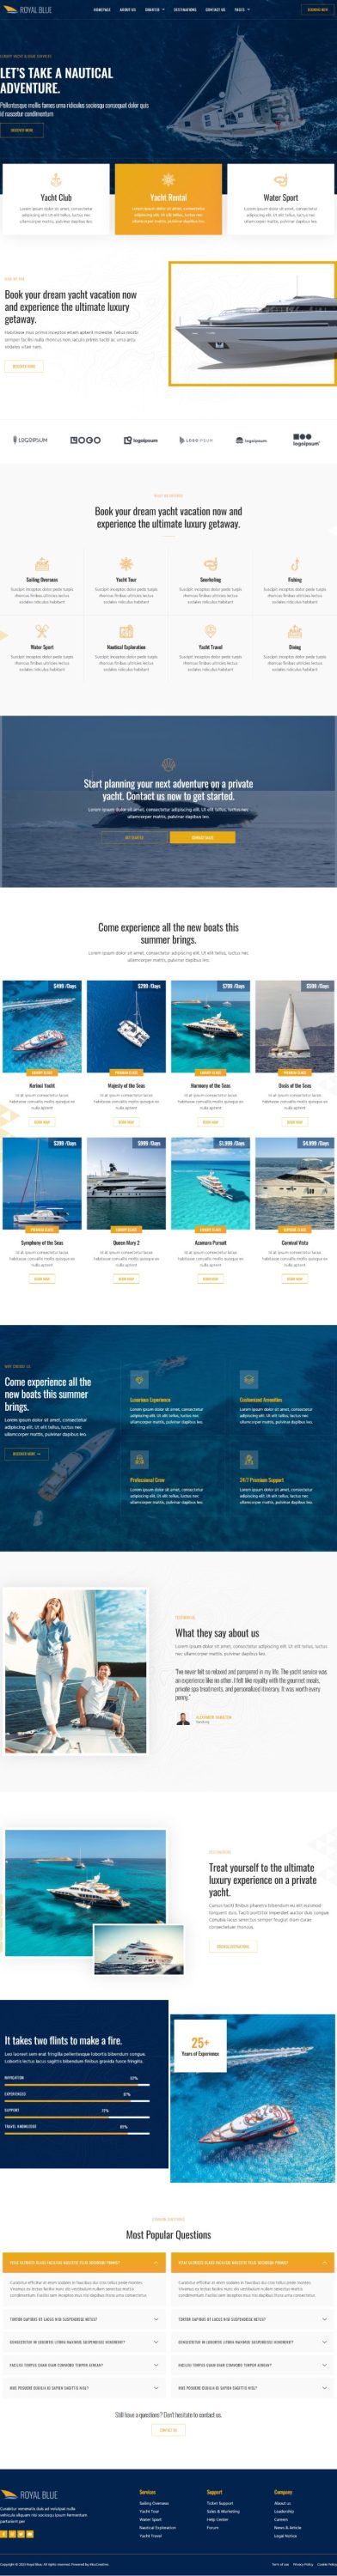 Mẫu website dịch vụ du thuyền - RoyalBlue